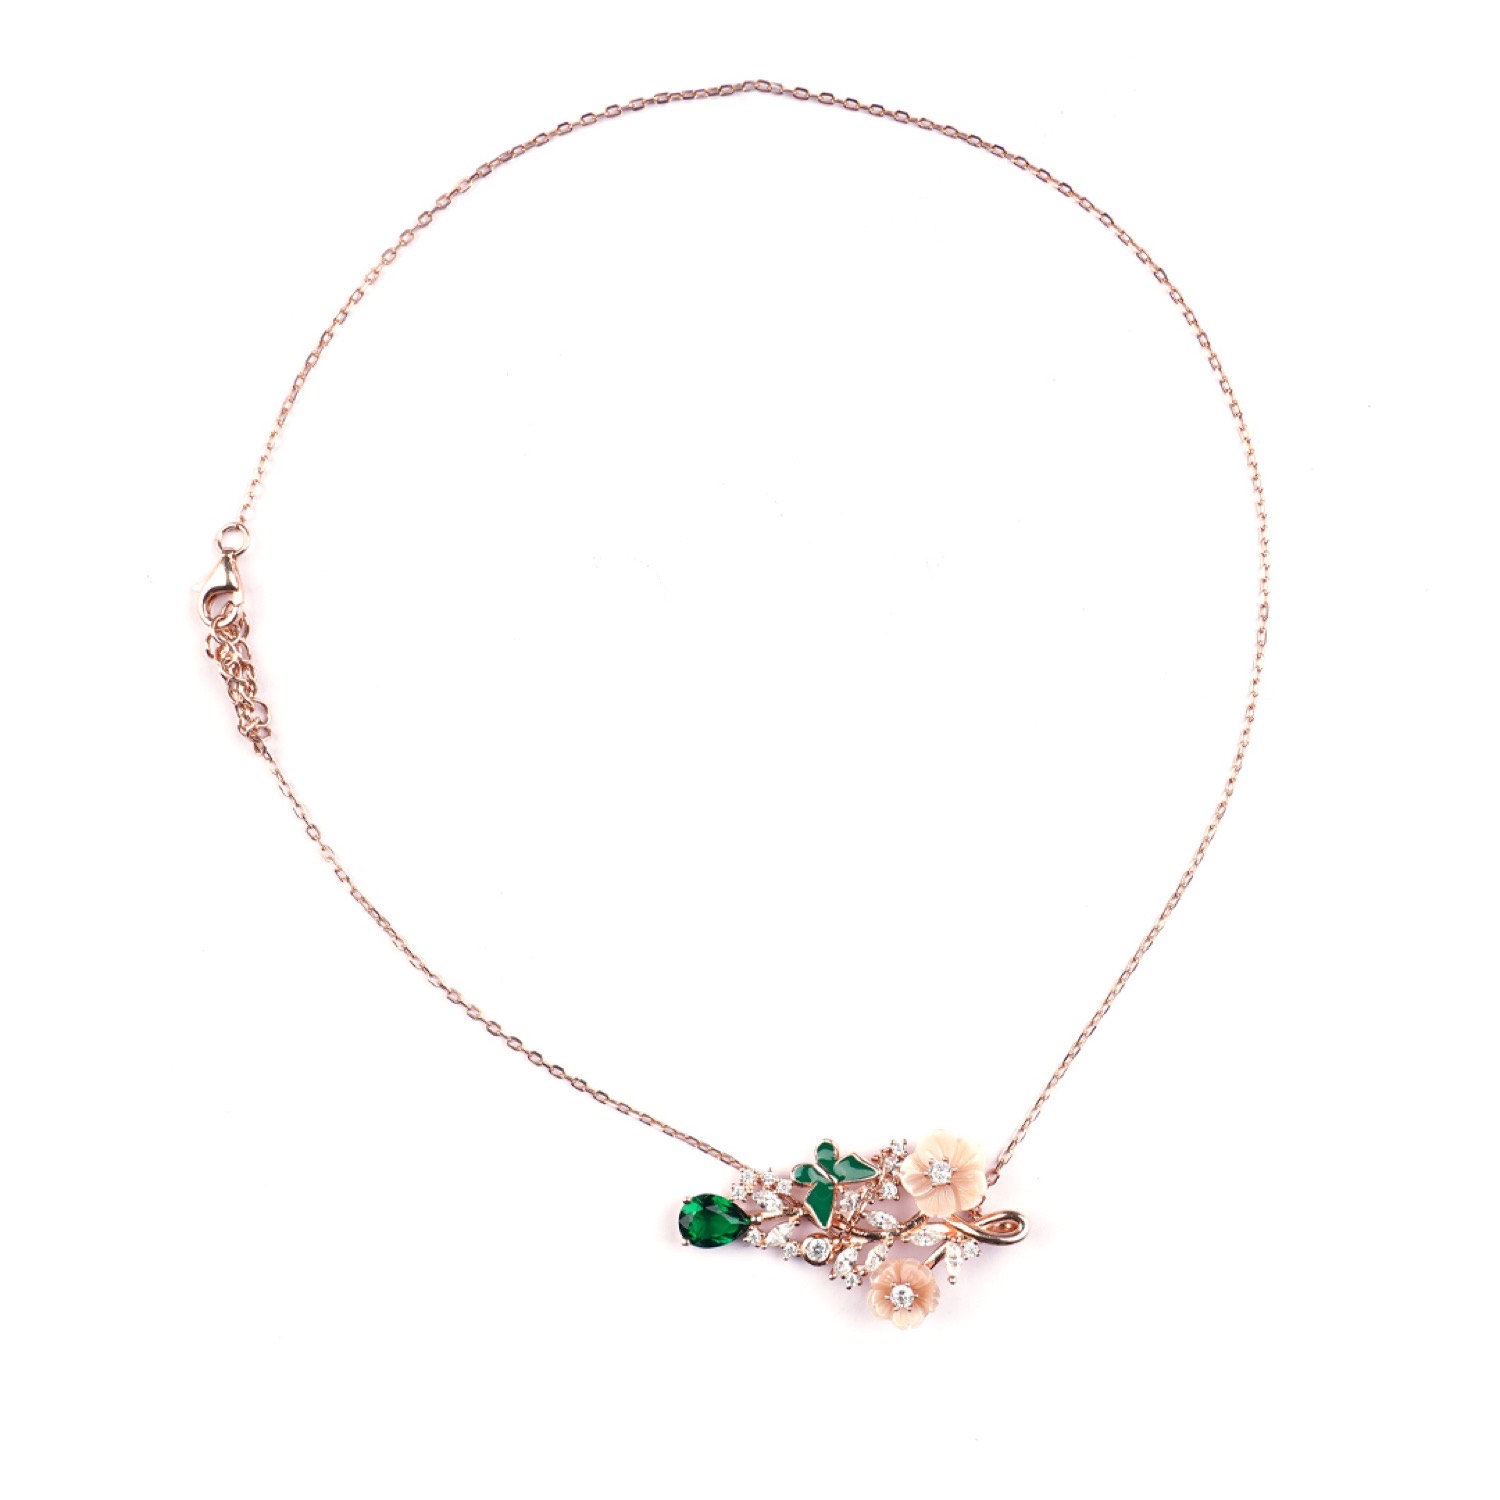 varam_chains_072022_floral_design_pendant_rose_gold_chain_1-1